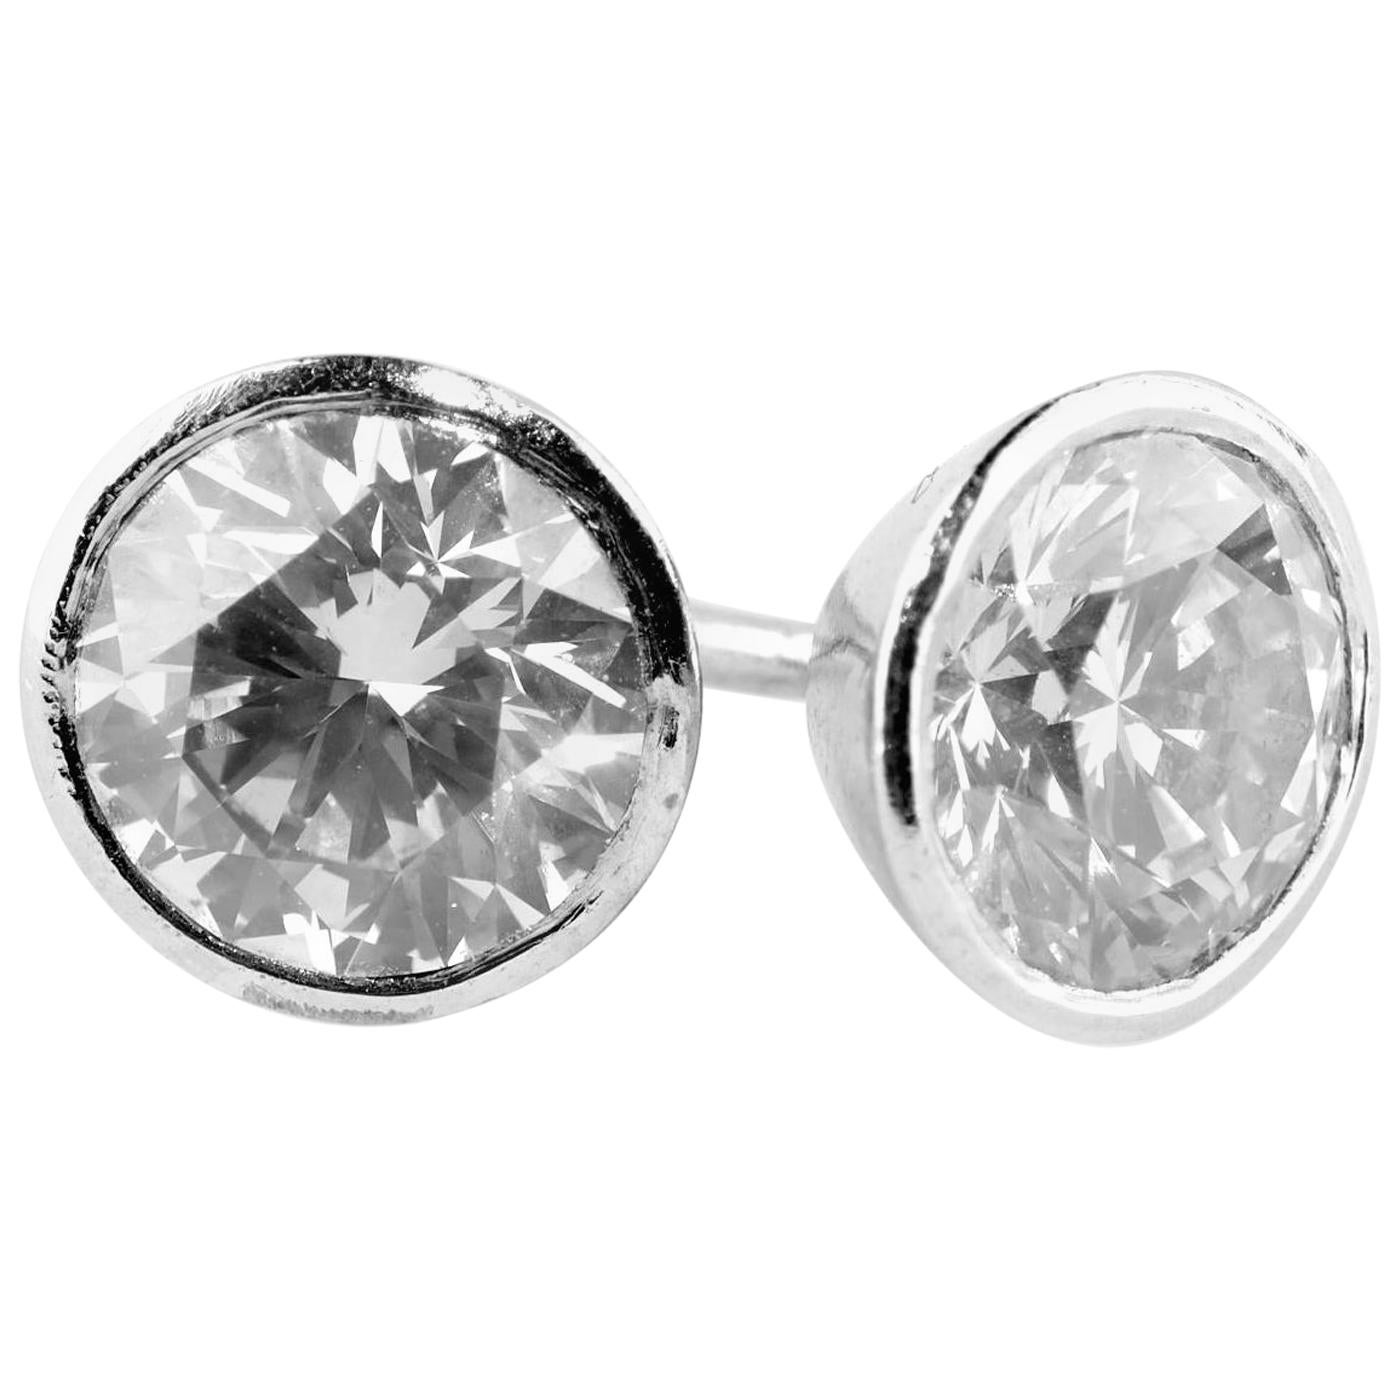 Round Diamond Earrings Pair with Screw Back Studs 2.5 Carat Platinum Si1 Clarity